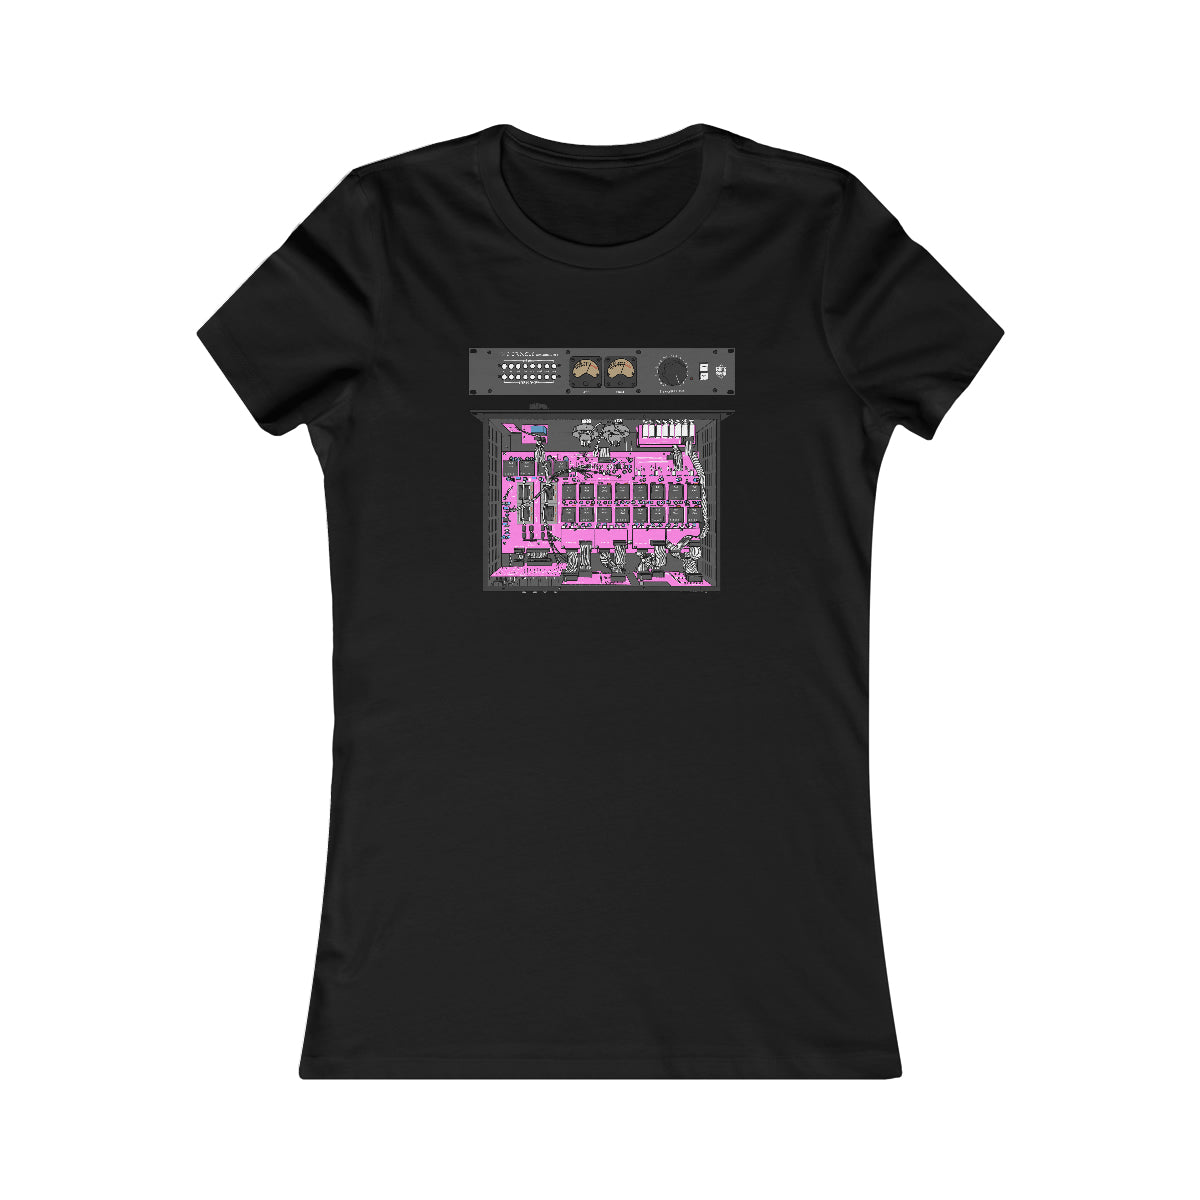 The Oracle Summing Mixer Pink PCB Woman's T-Shirt Black